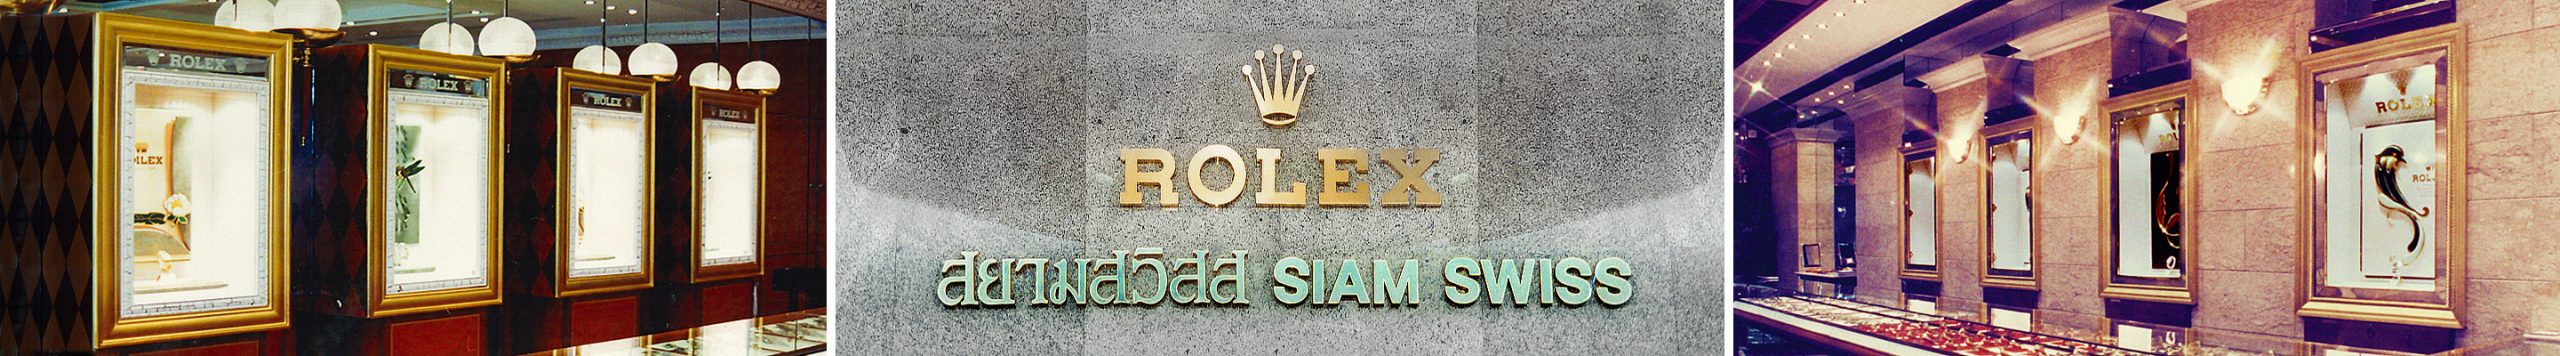 Rolex Our History | Rolex Official Retailer - Siam Swiss